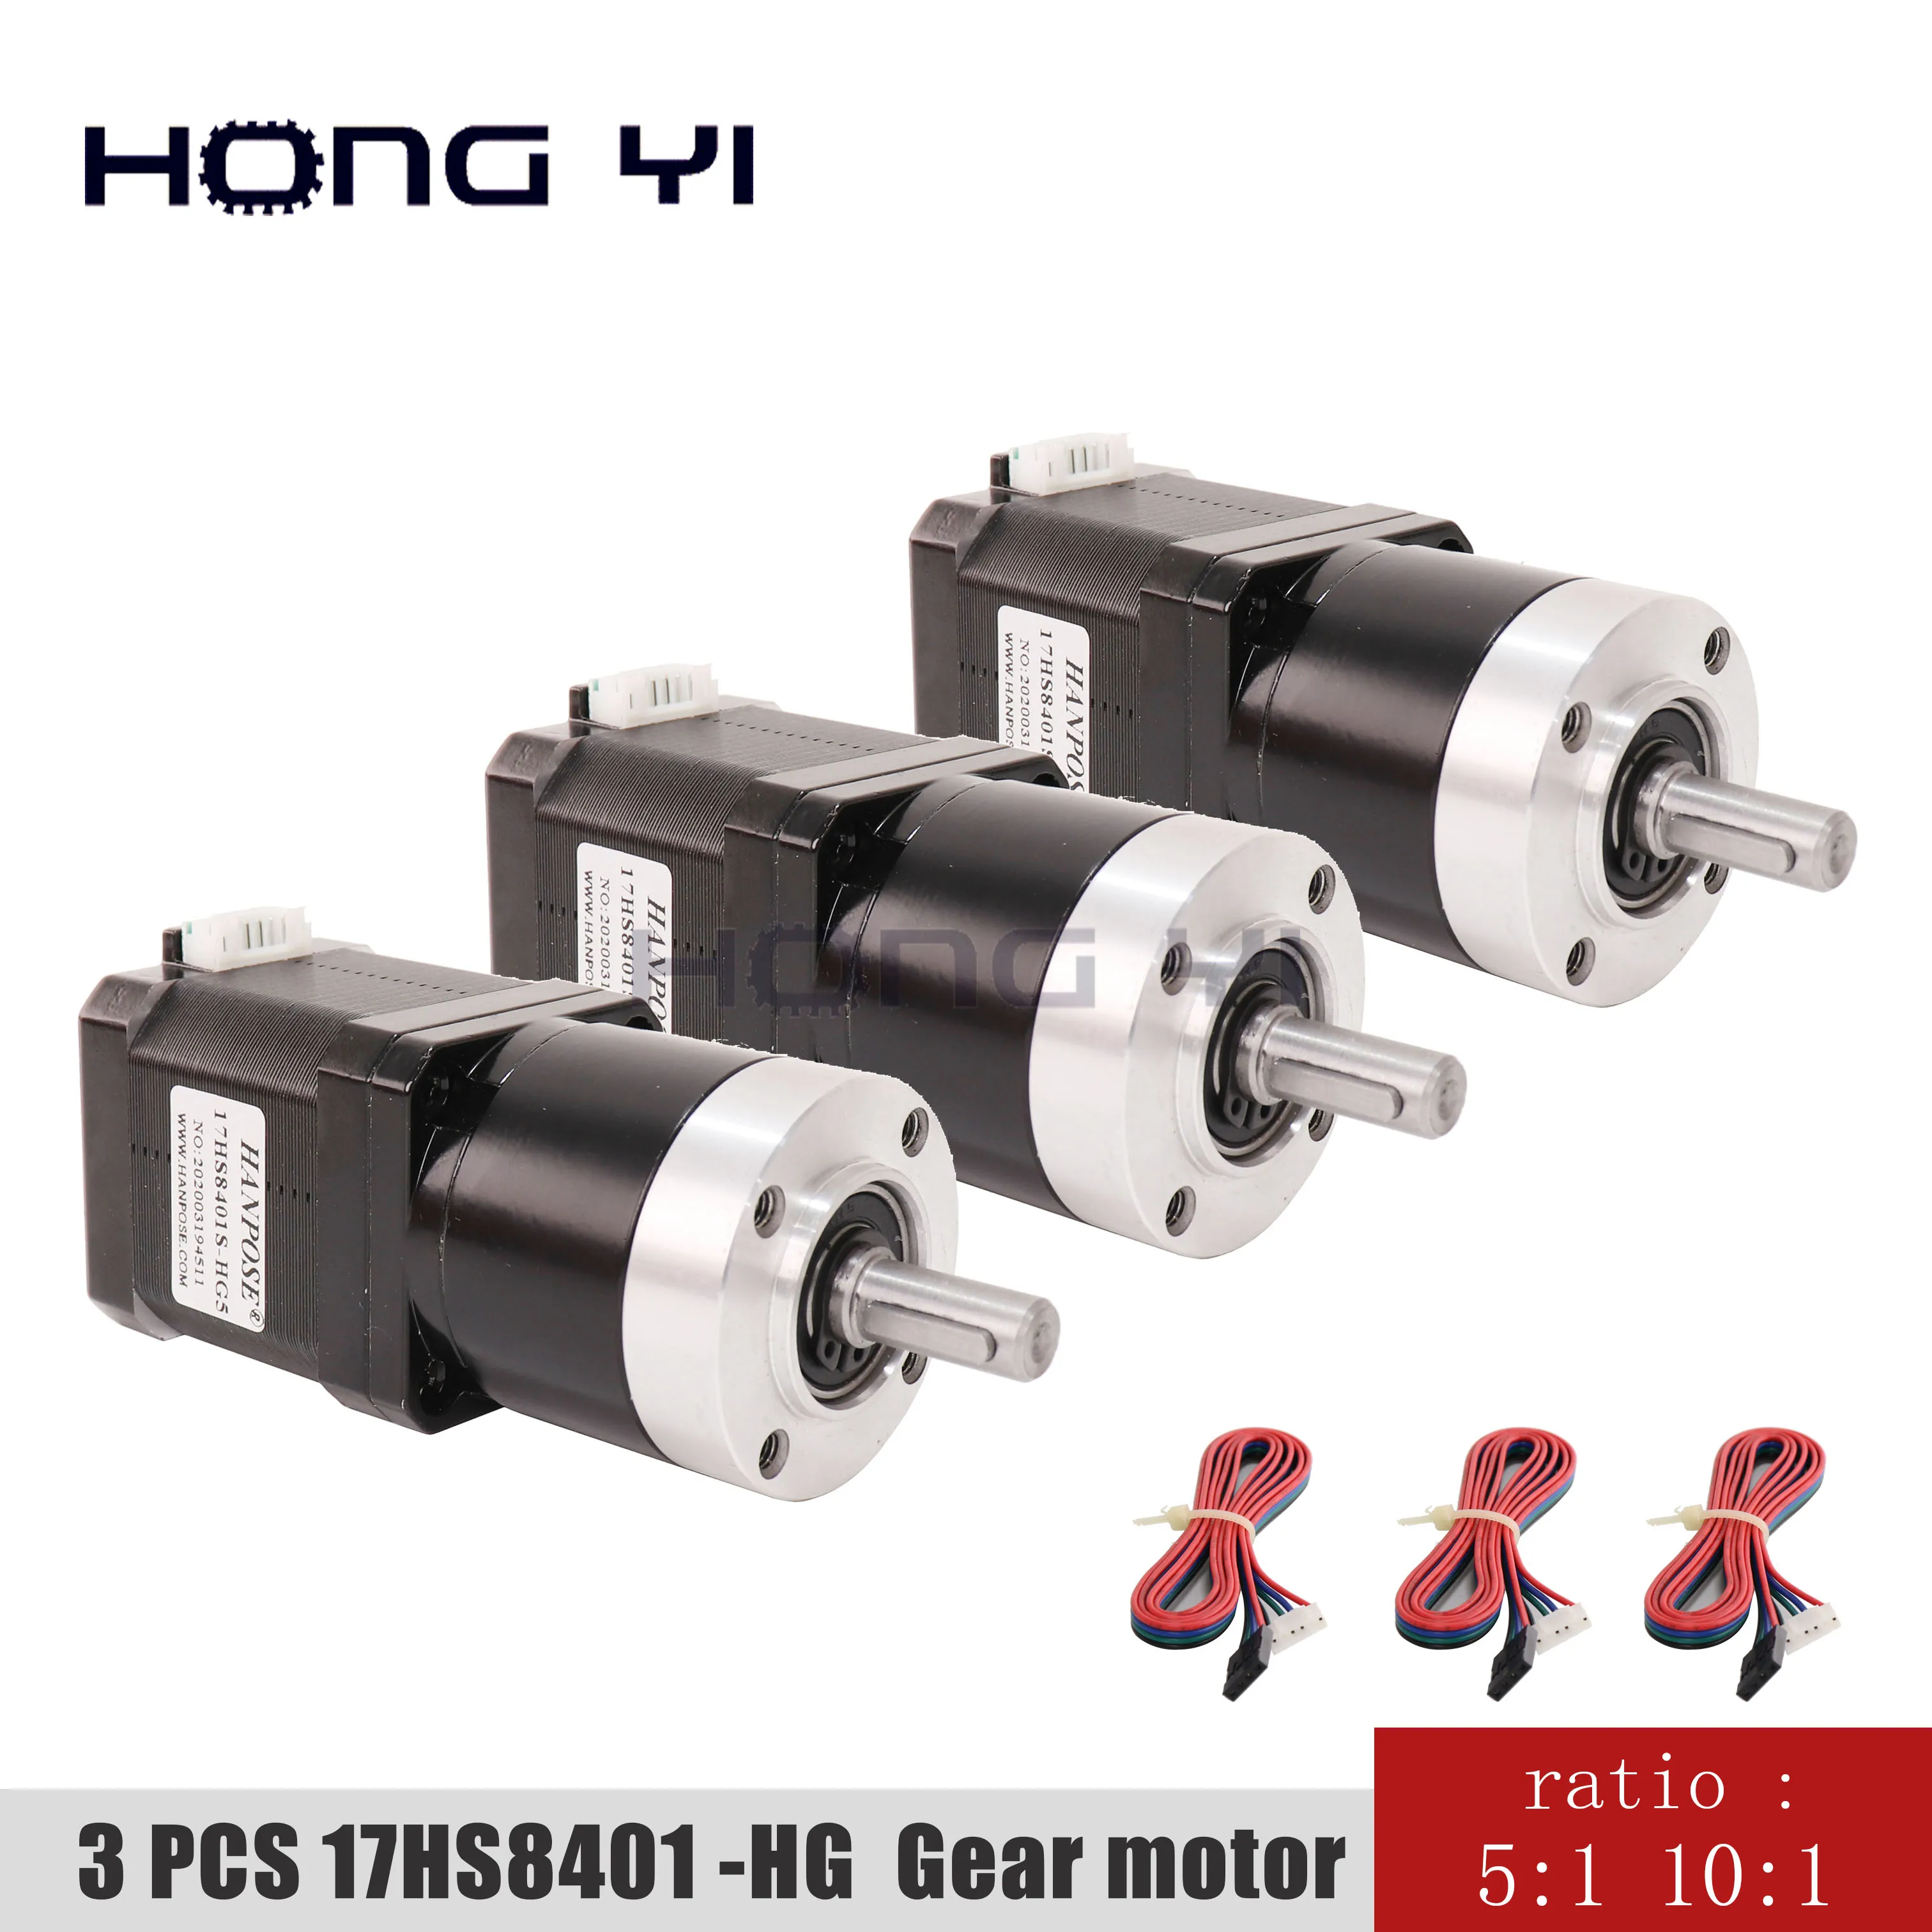 

3pcs Nema17 High precision reduction motor Gear ratio 5-1 10-1 Planetary Gearbox stepper motor 17HS8401S-HG for 3d printer motor